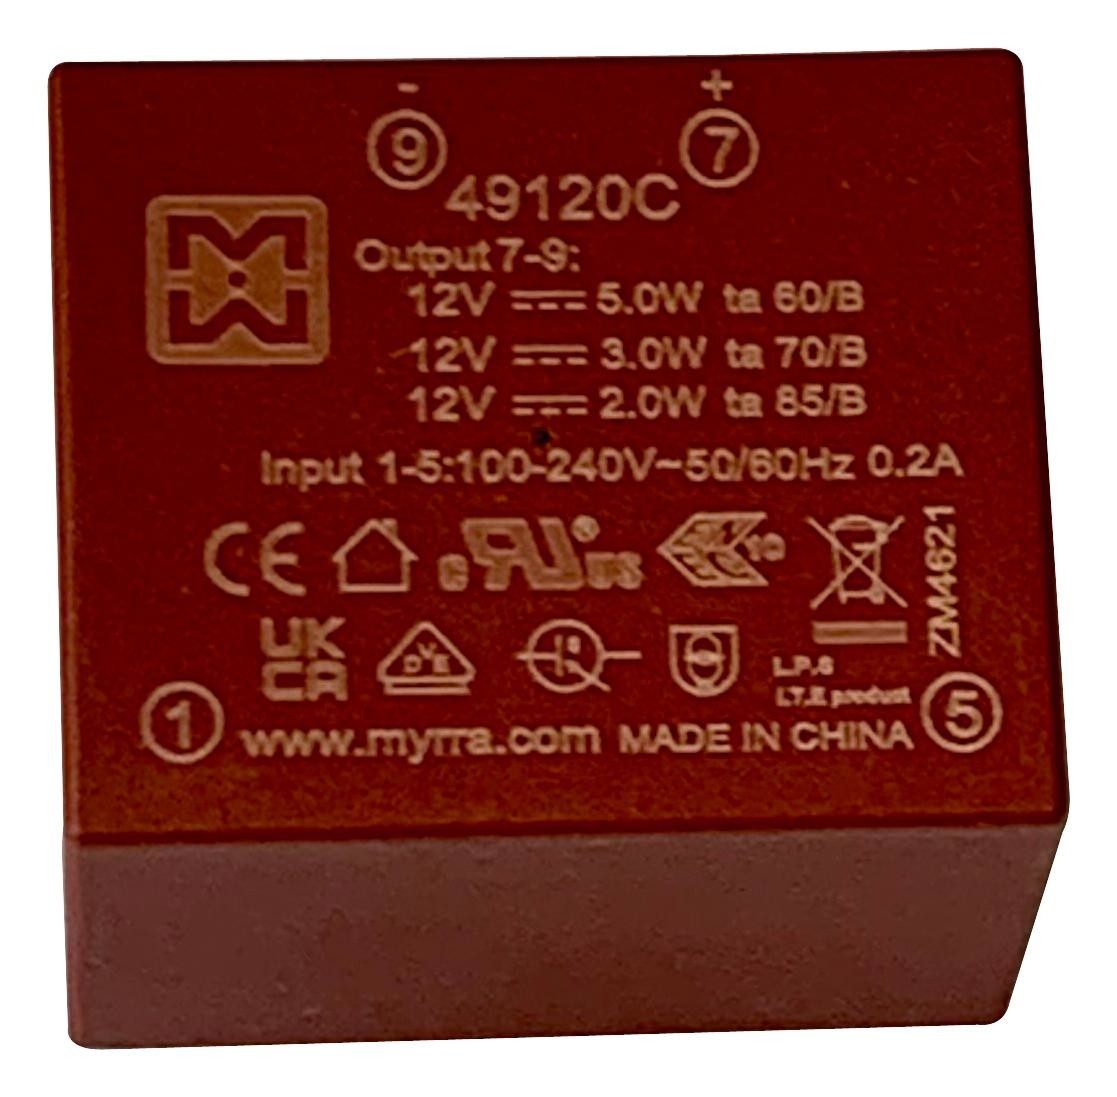 Myrra 49120C Power Supply, Ac-Dc, 12V, 0.42A